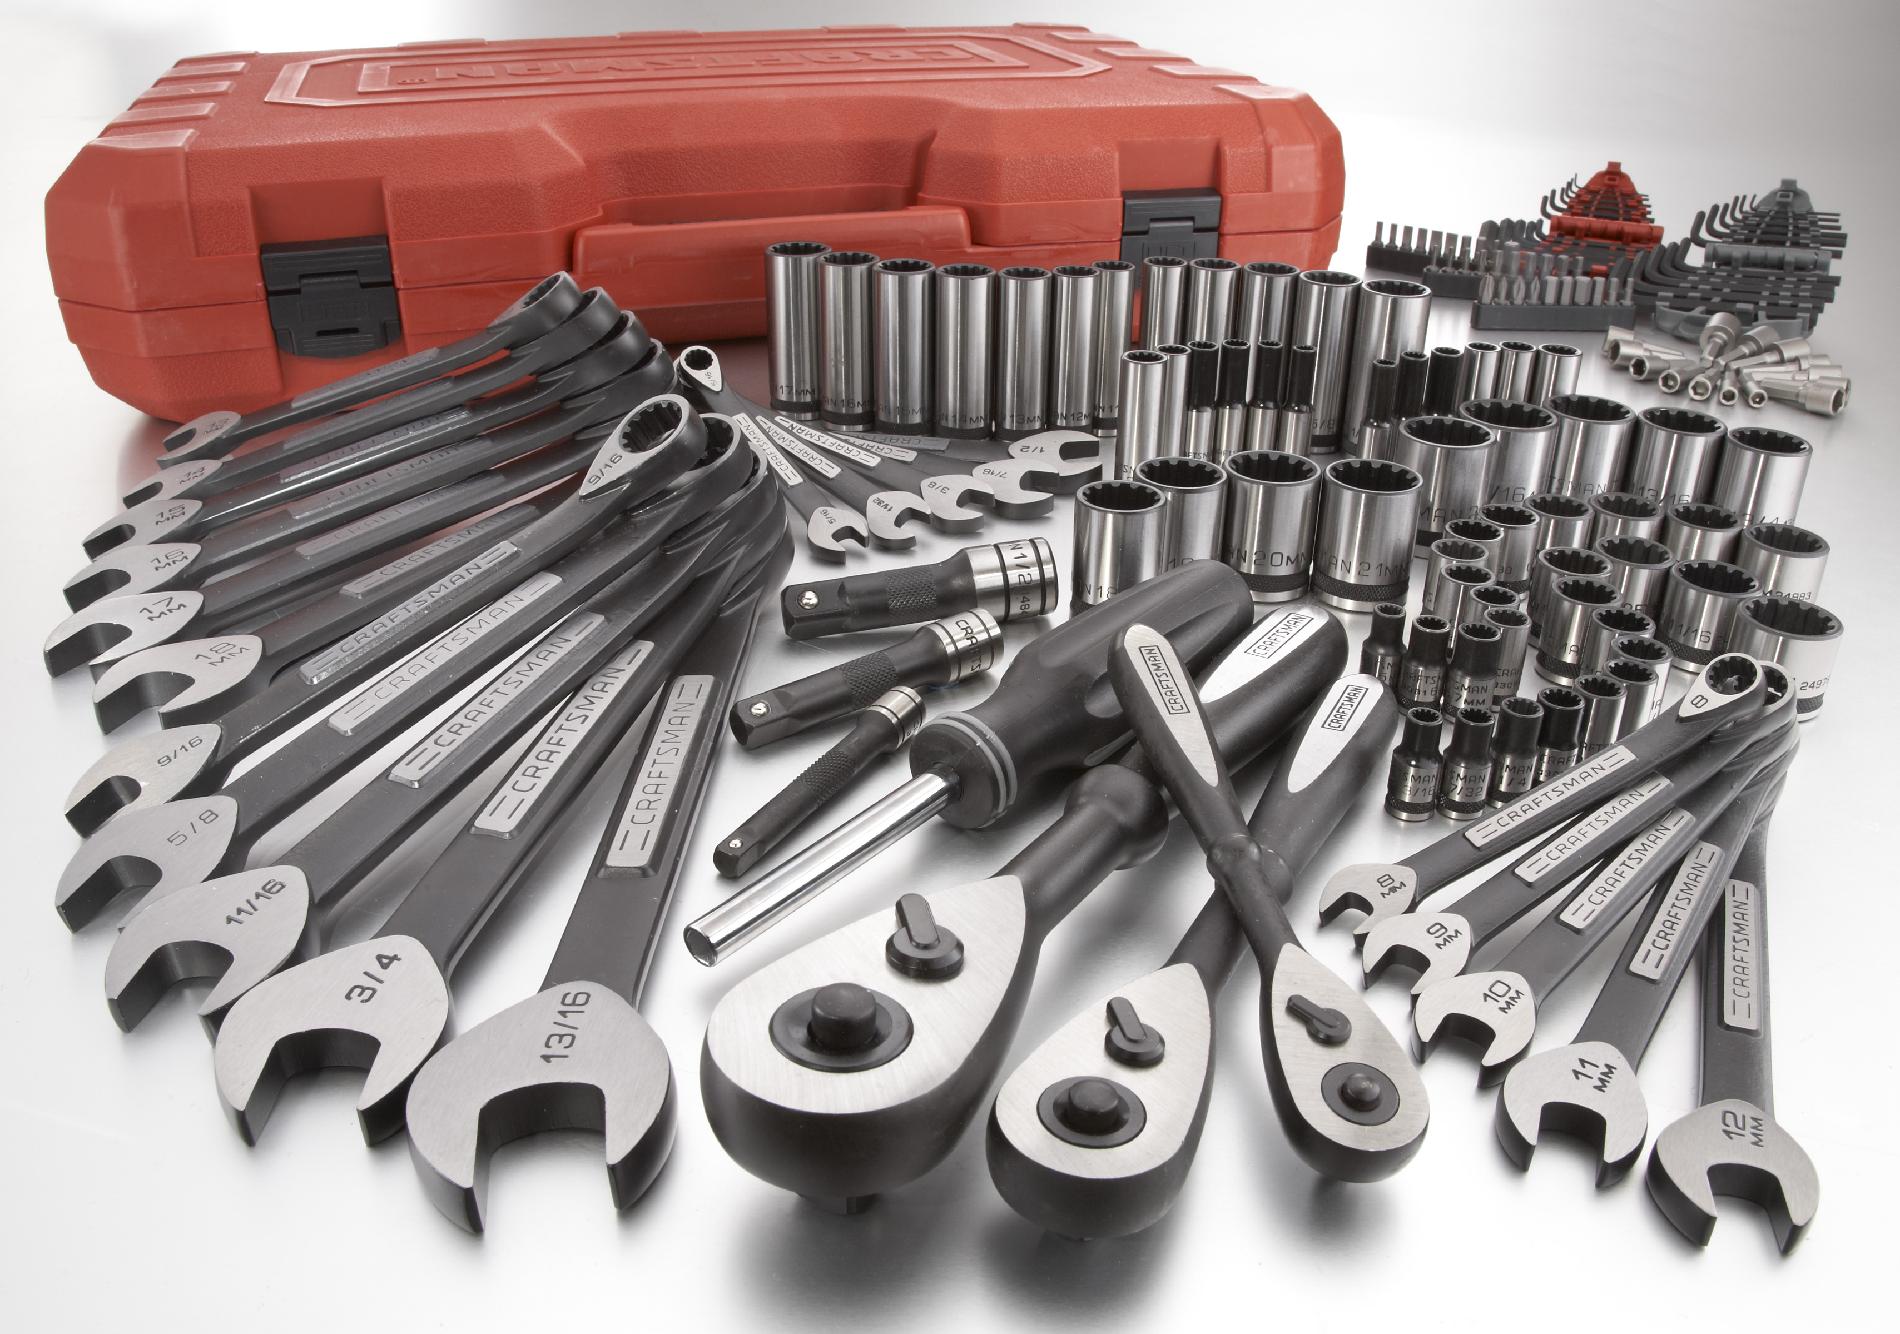 Craftsman 153pc Universal Mechanics Tool Set Shop Your Way Online